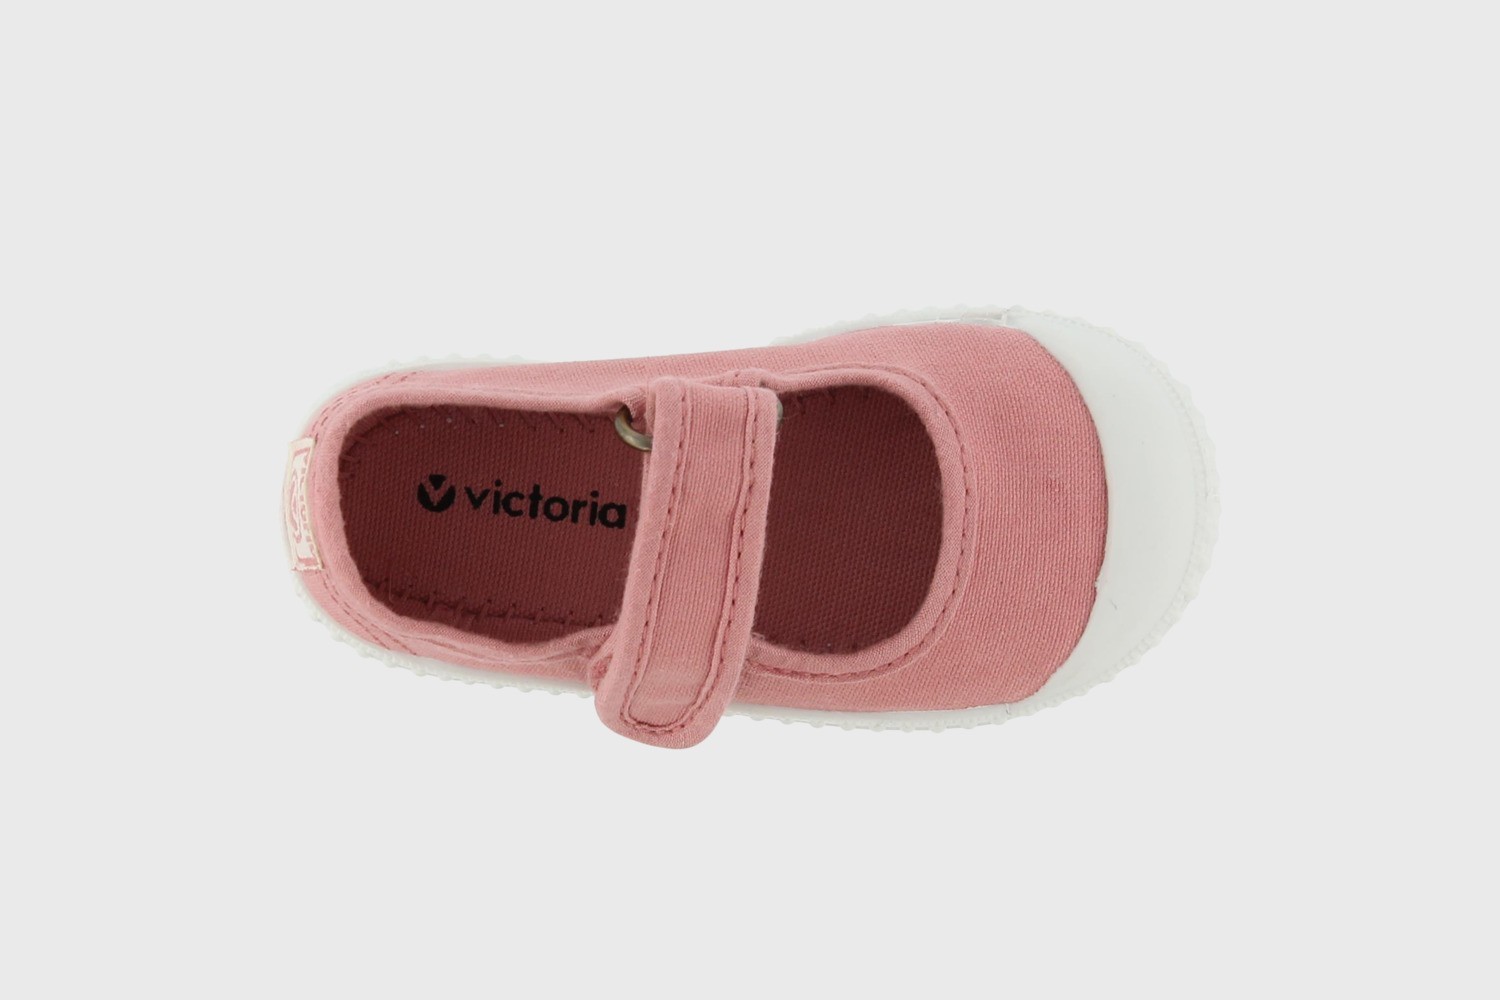 Victoria Shoes Ballerinasko, Modell 36605, Farge: Nude 